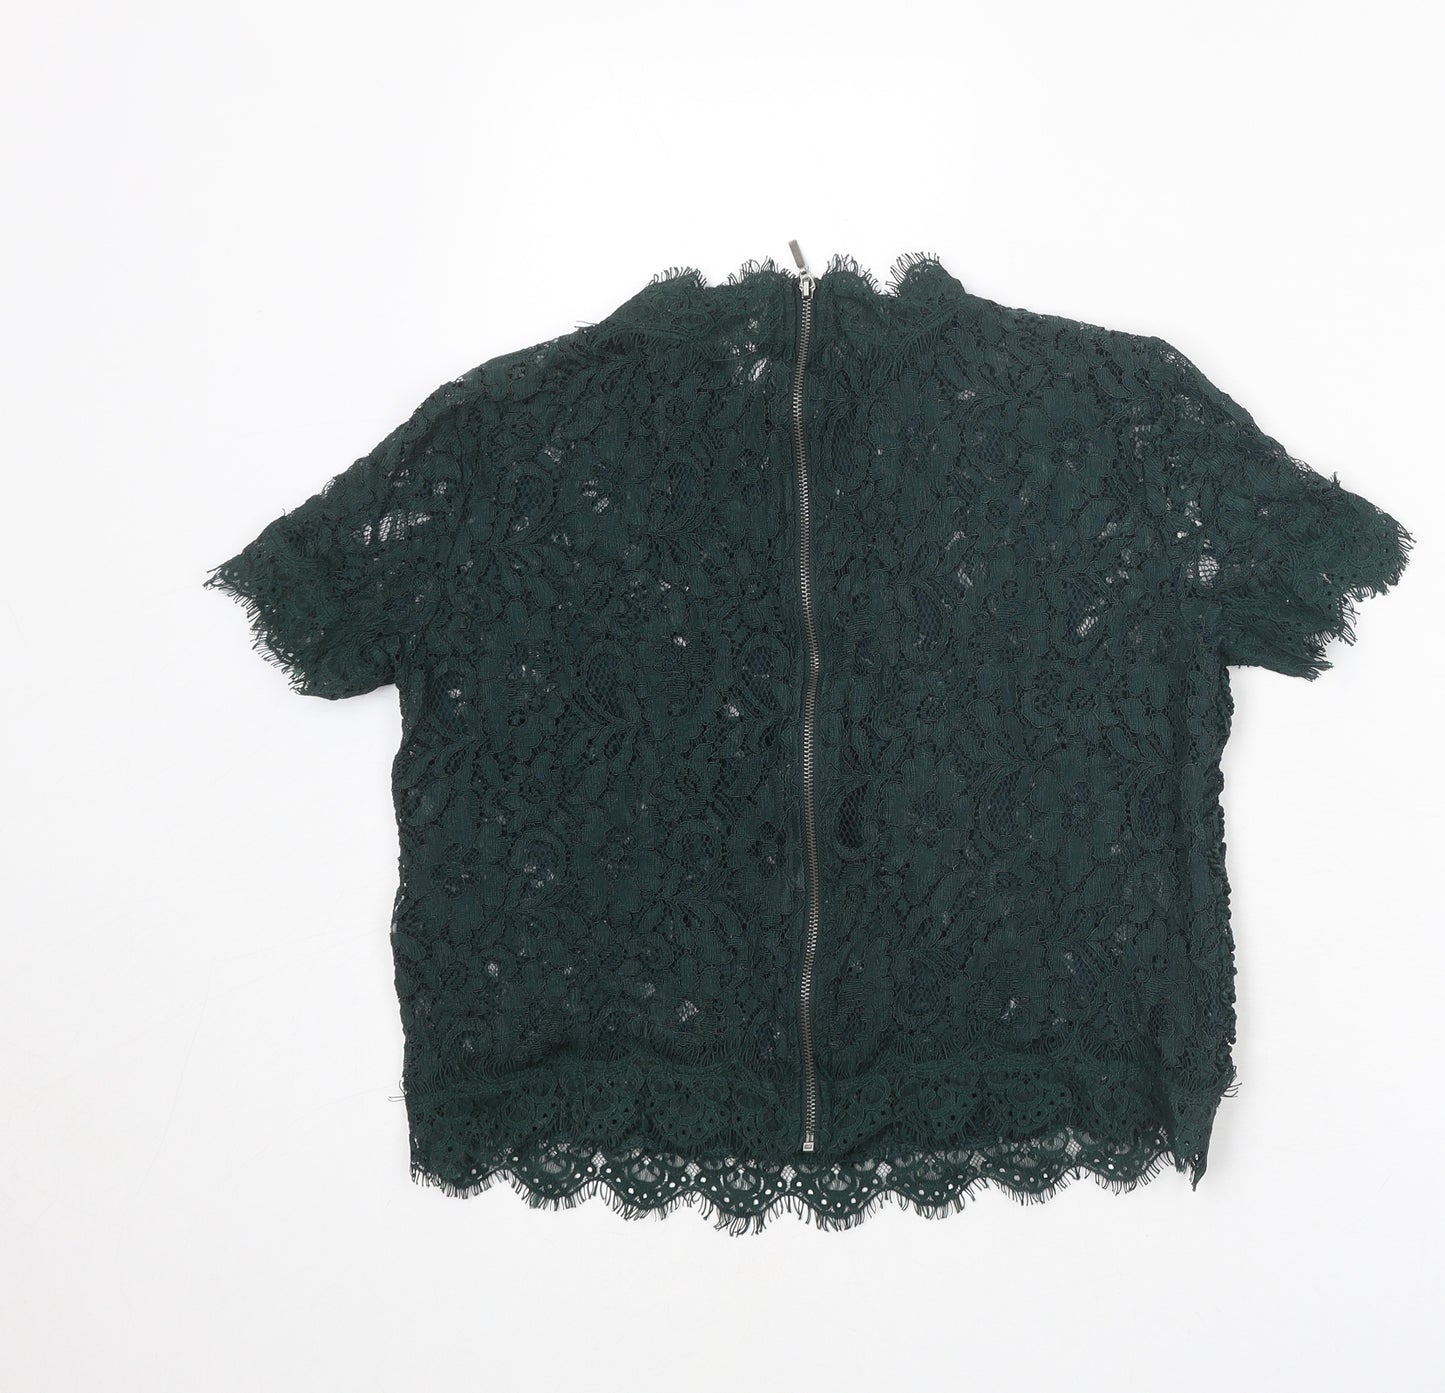 Zara Womens Green Polyester Basic Blouse Size M Round Neck